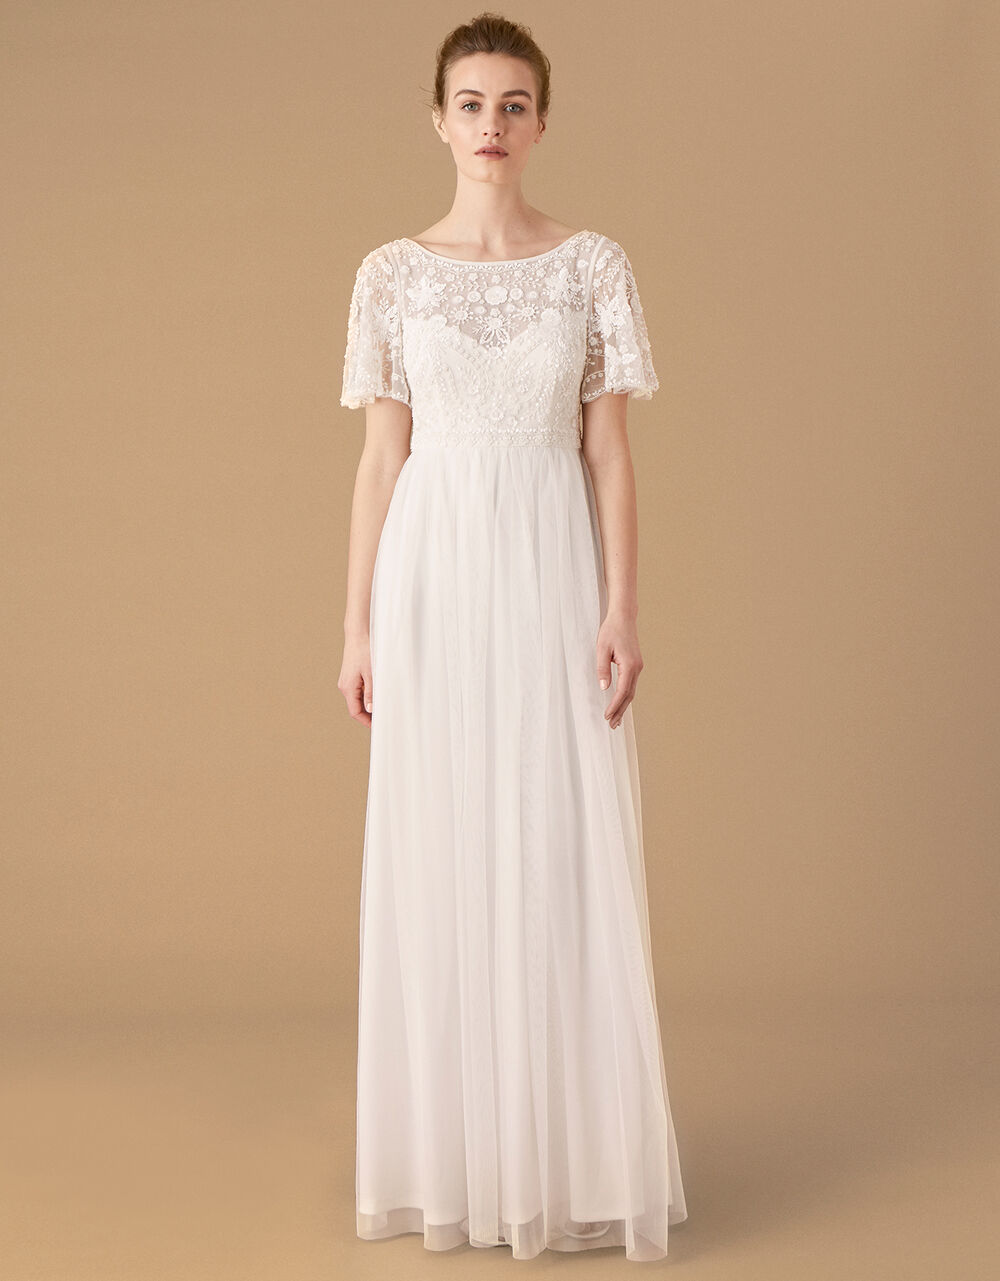 Wedding The Bride | Shelly Floral Embellished Bridal Dress Ivory - YG83880